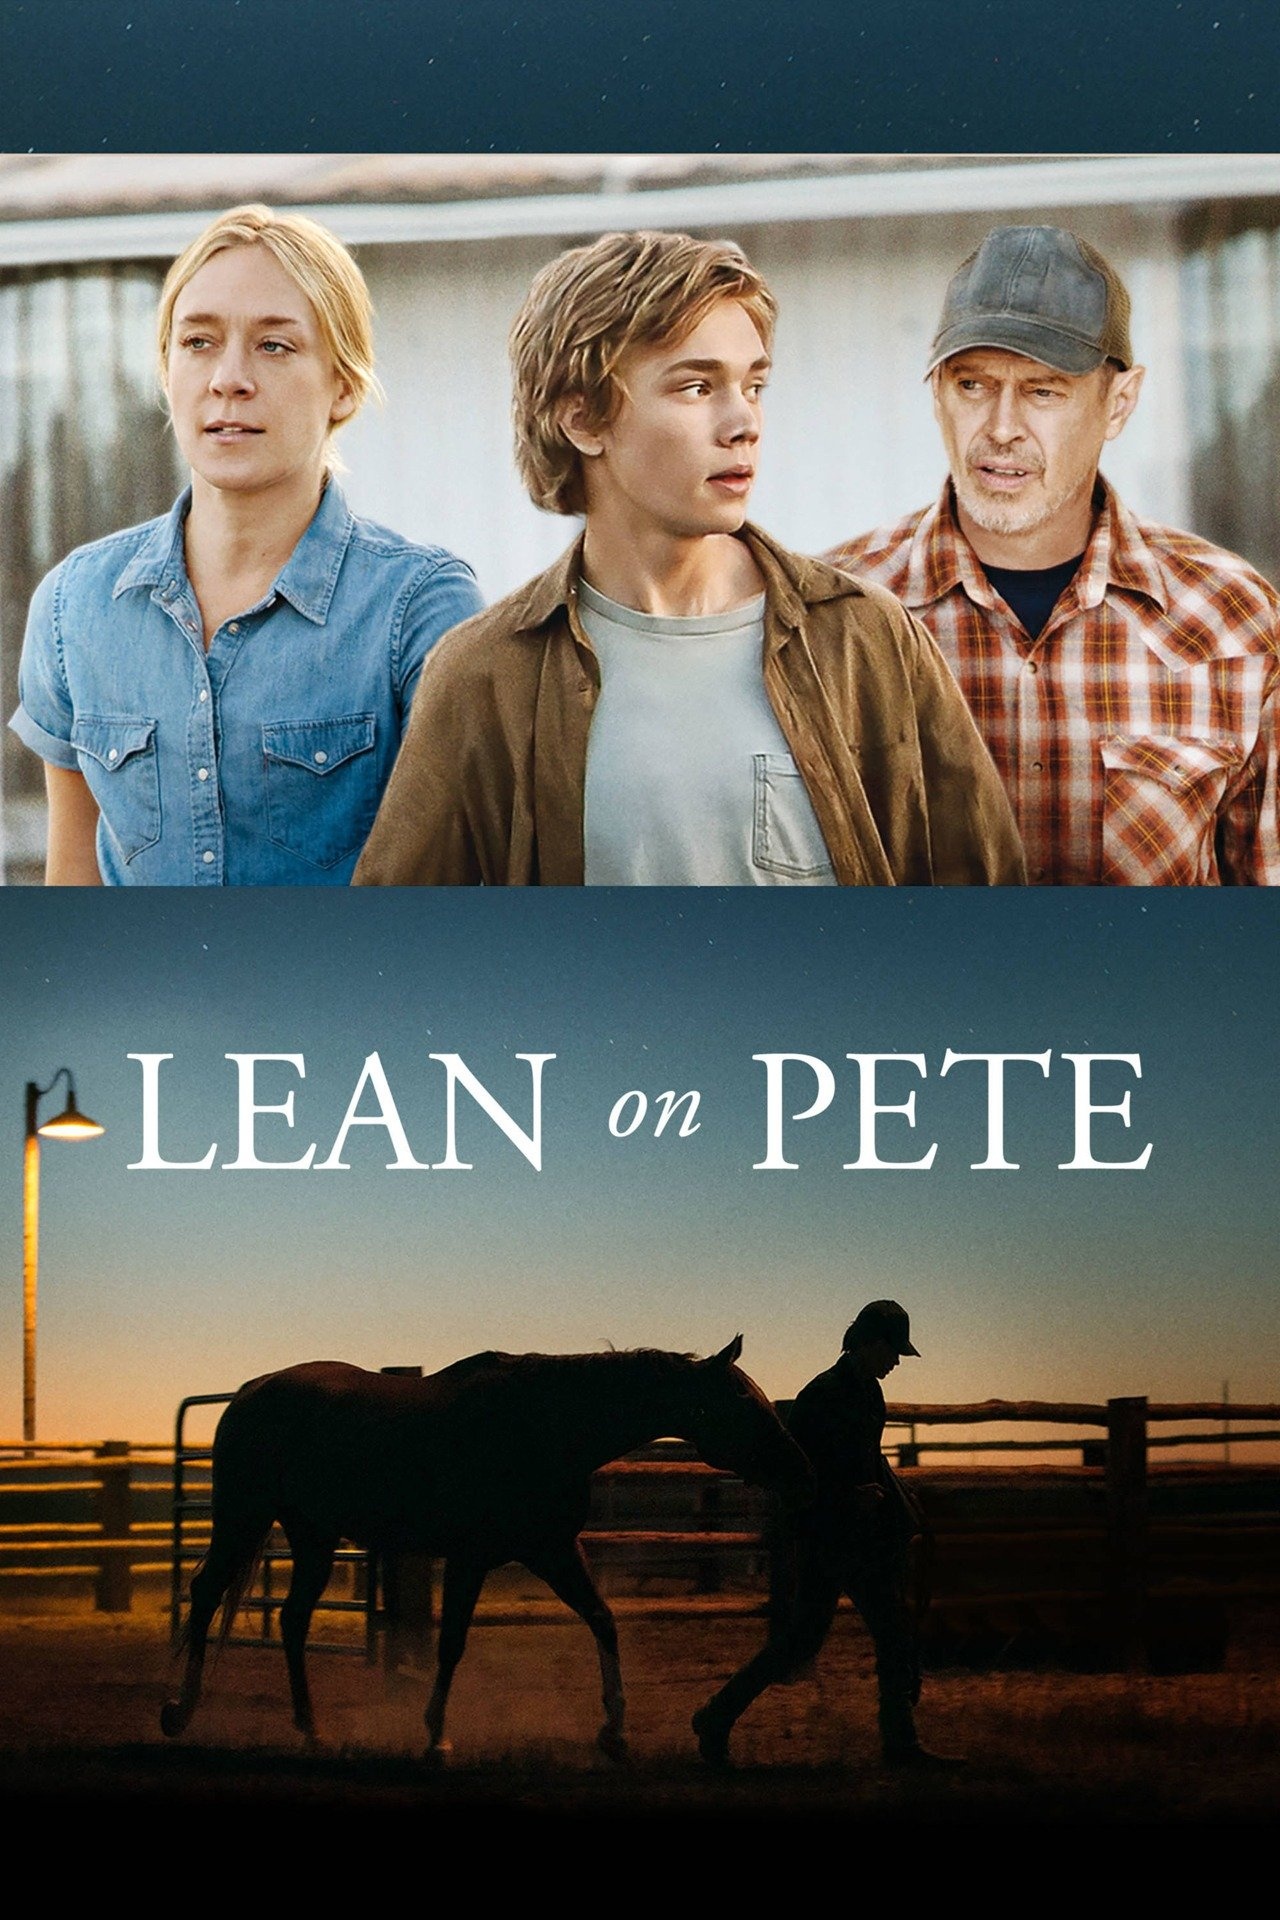 Lean on Pete movie, Watch full movie free, Online streaming, Plex platform, 1280x1920 HD Phone